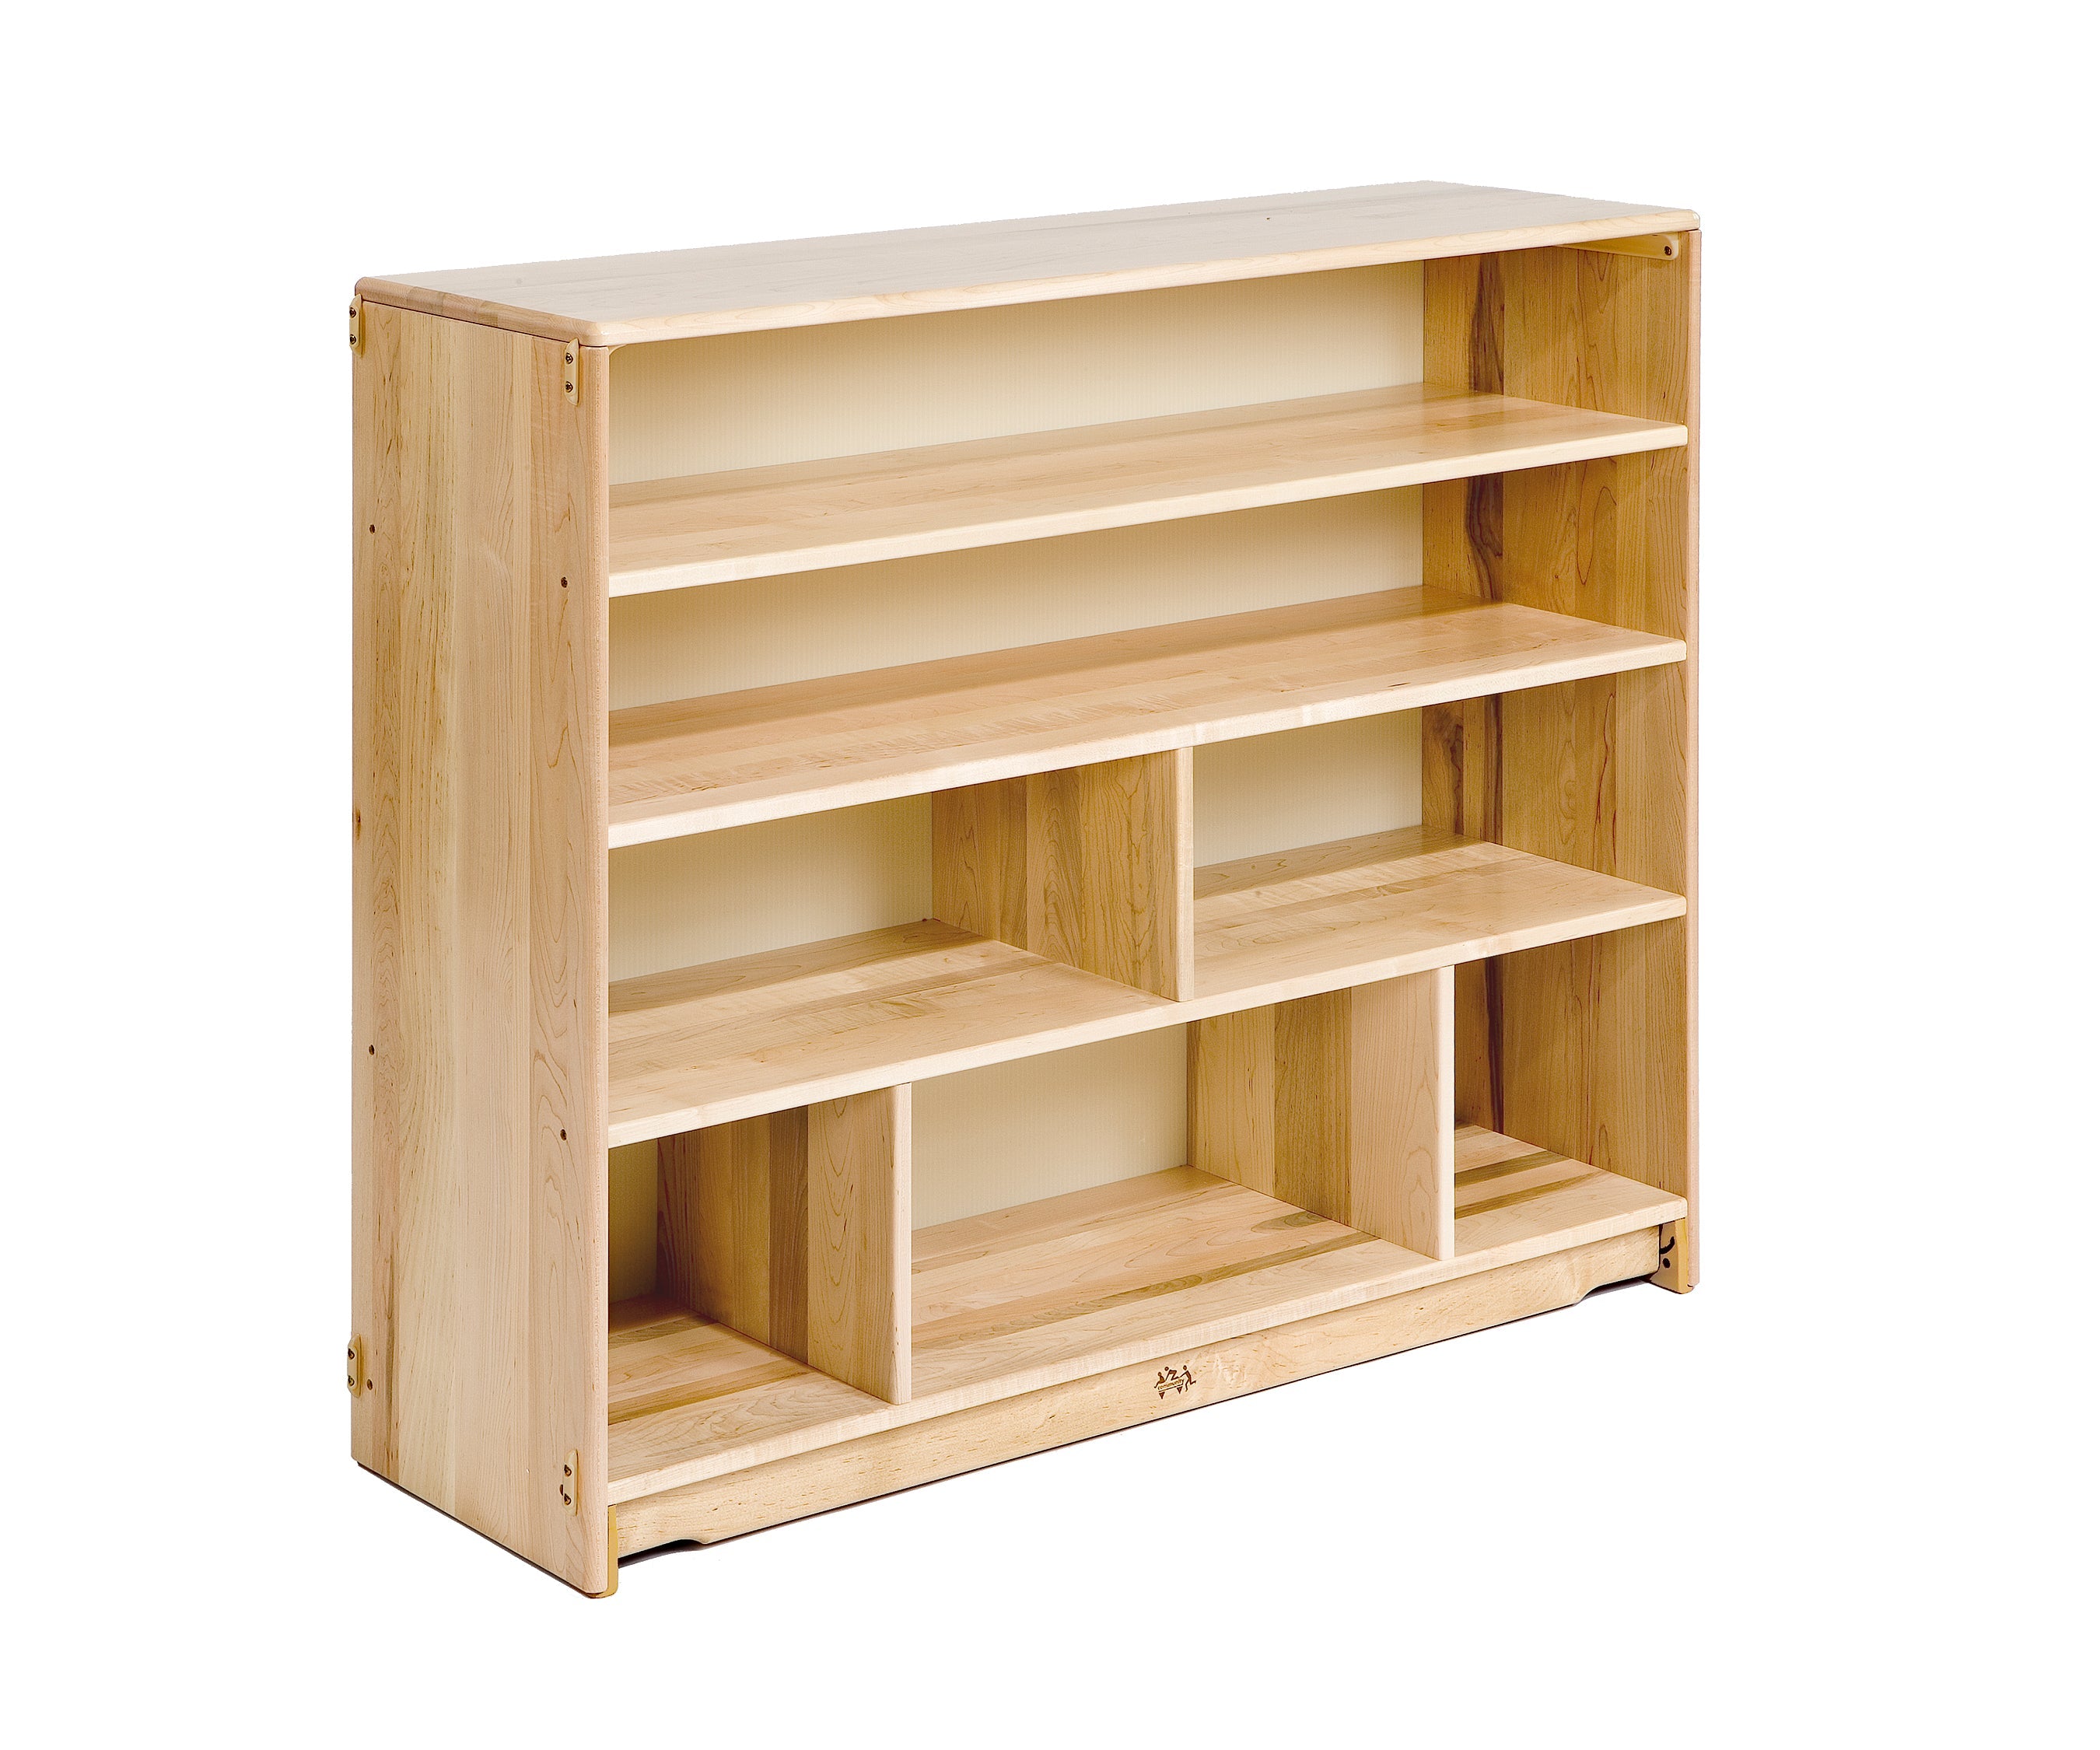 Fixed Shelf 4' x 40" by Community Playthings - louisekool